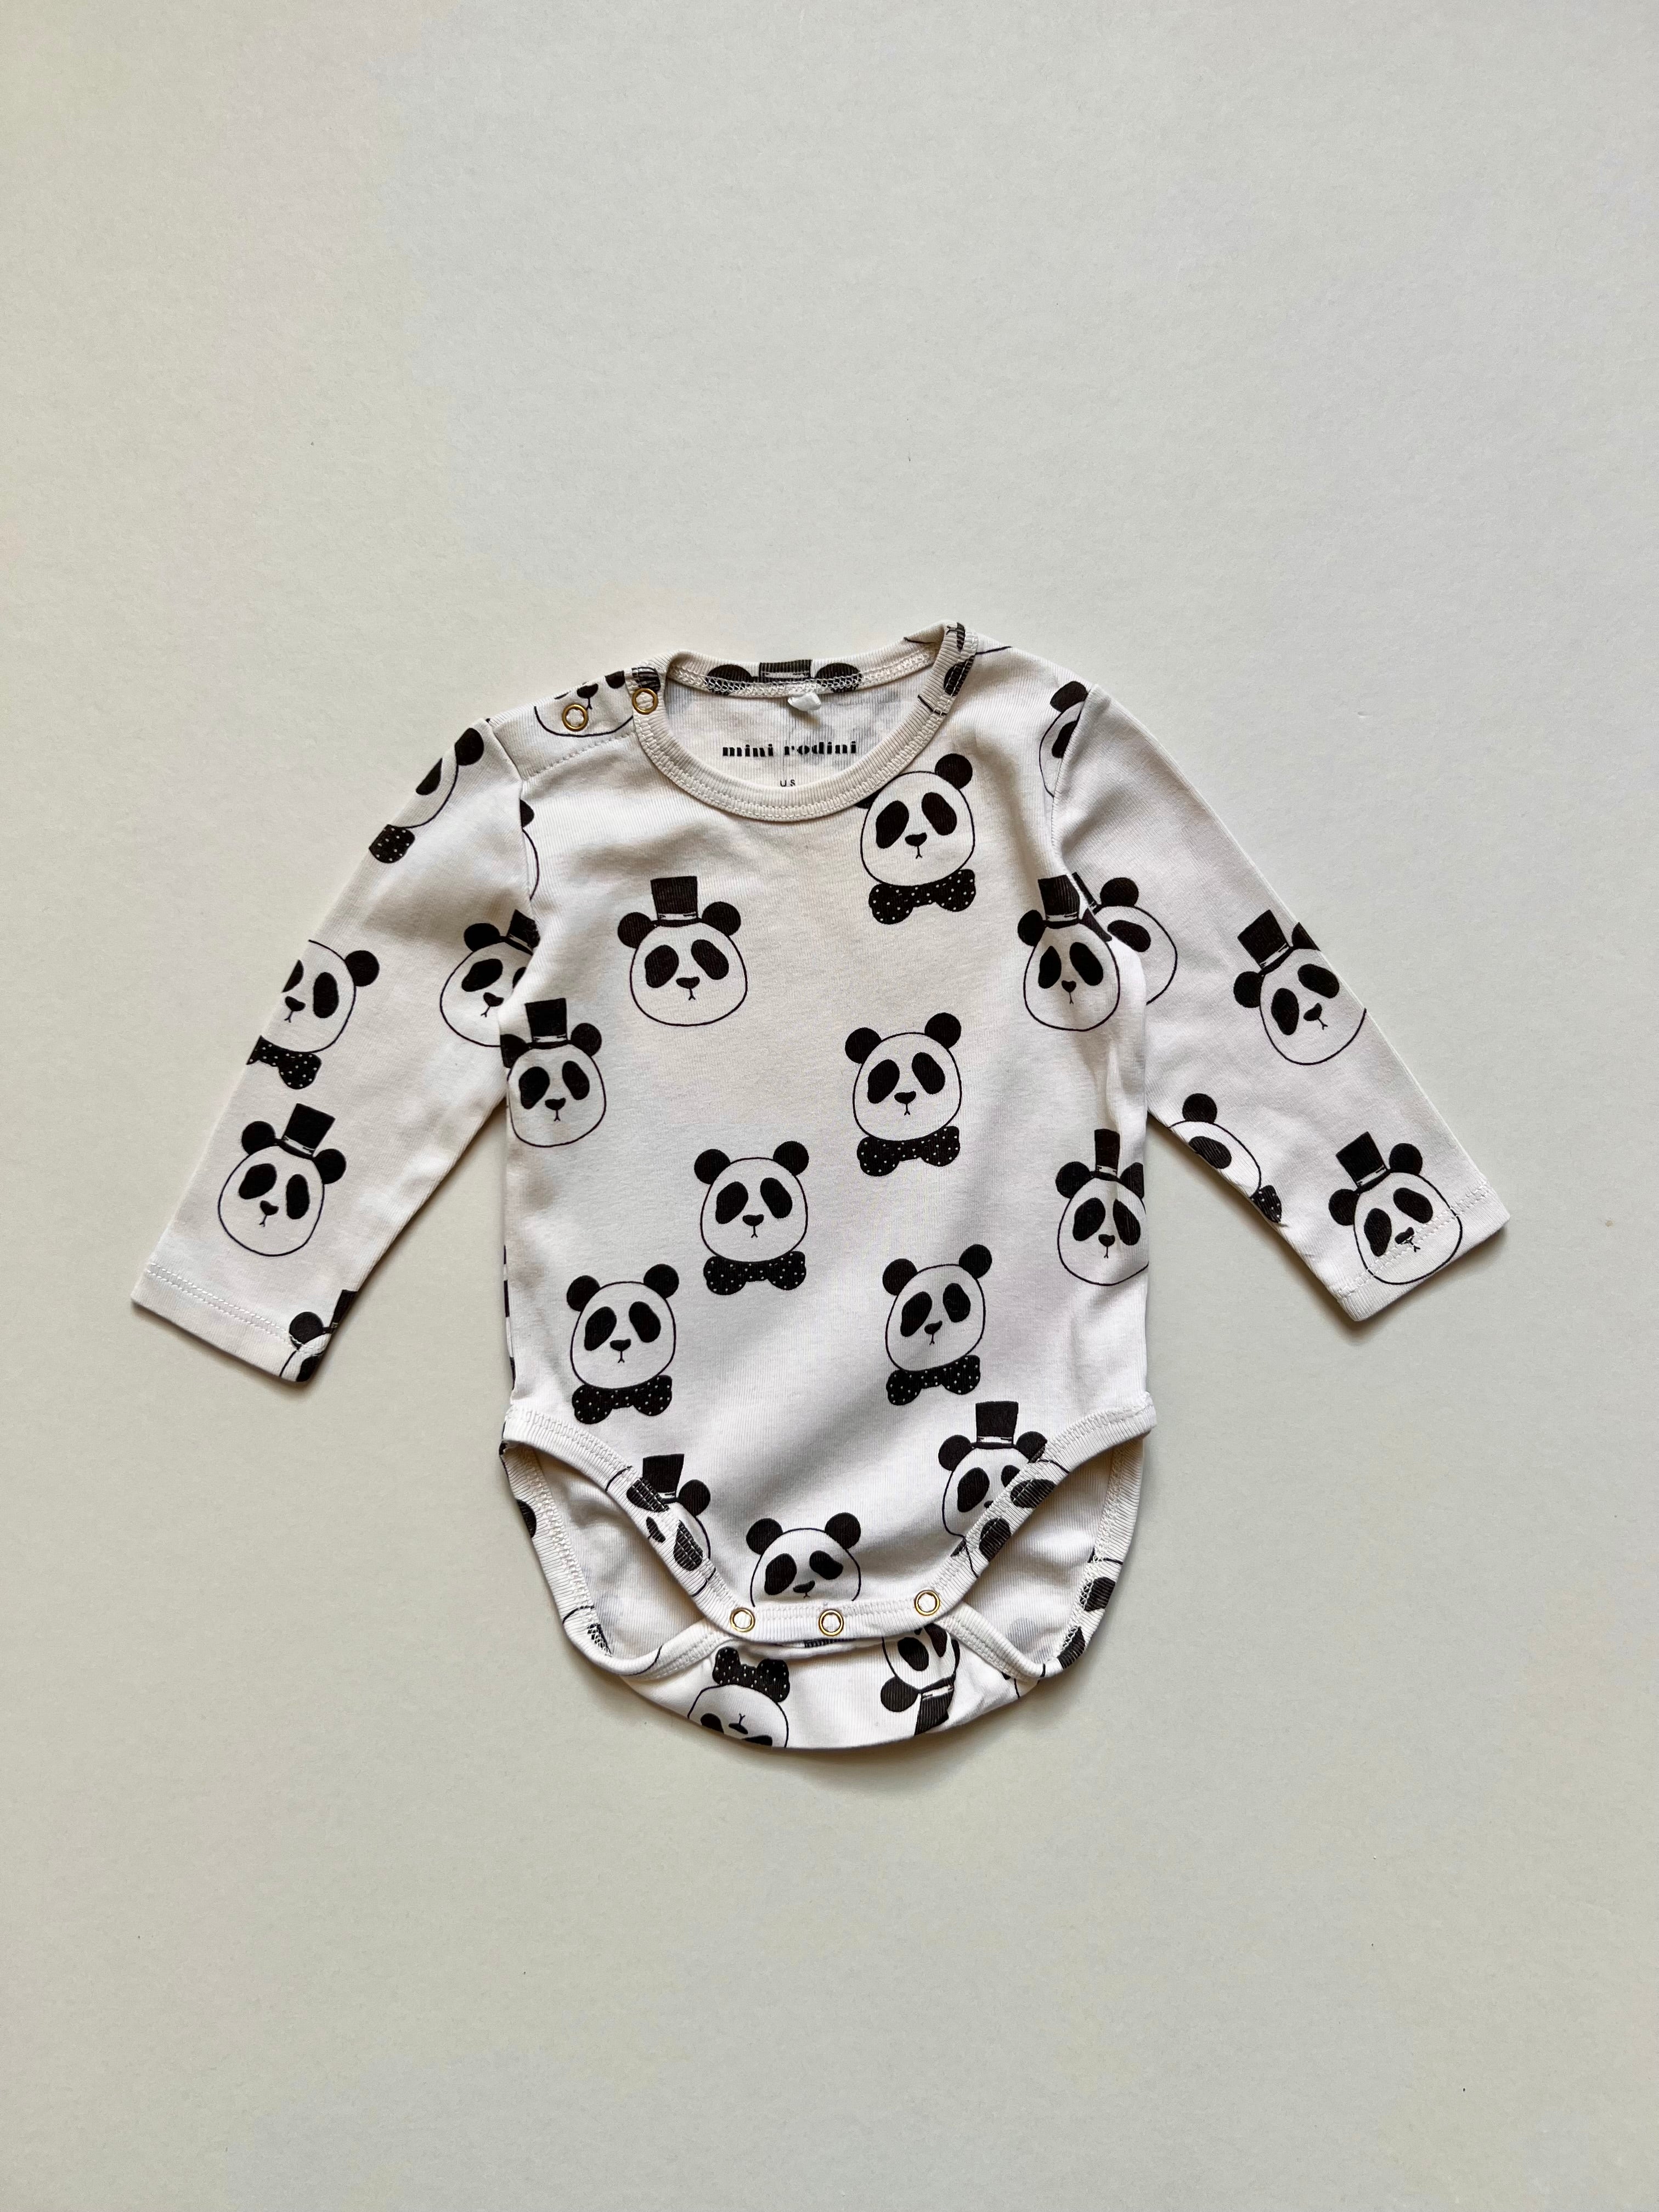 Mini Rodini Panda Baby Vest 4-6 Months